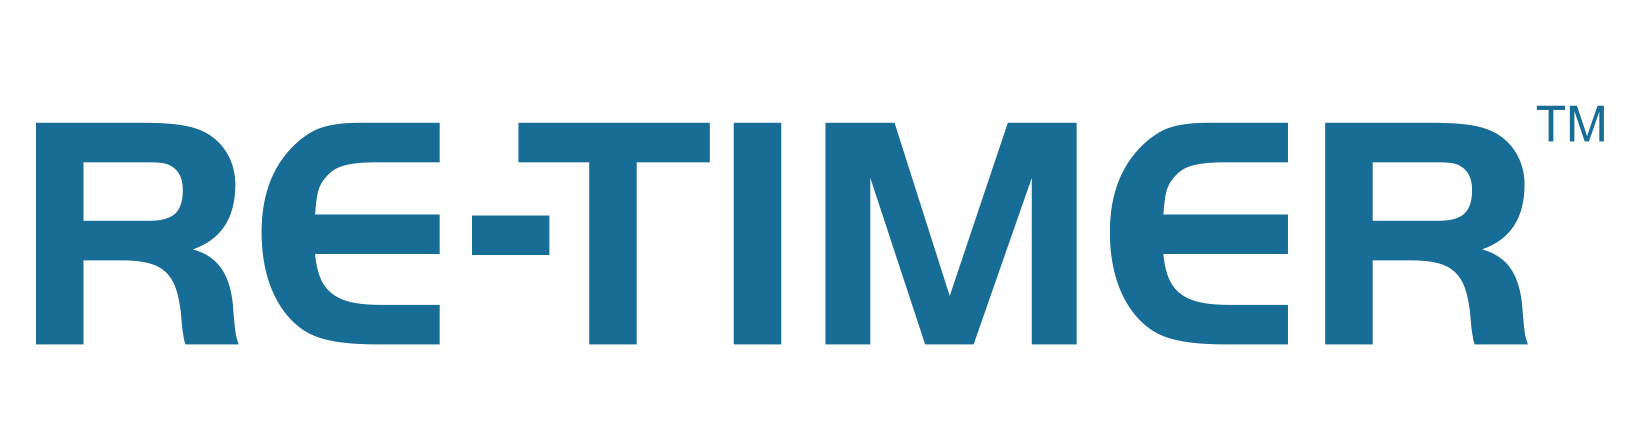 Retime Logo 